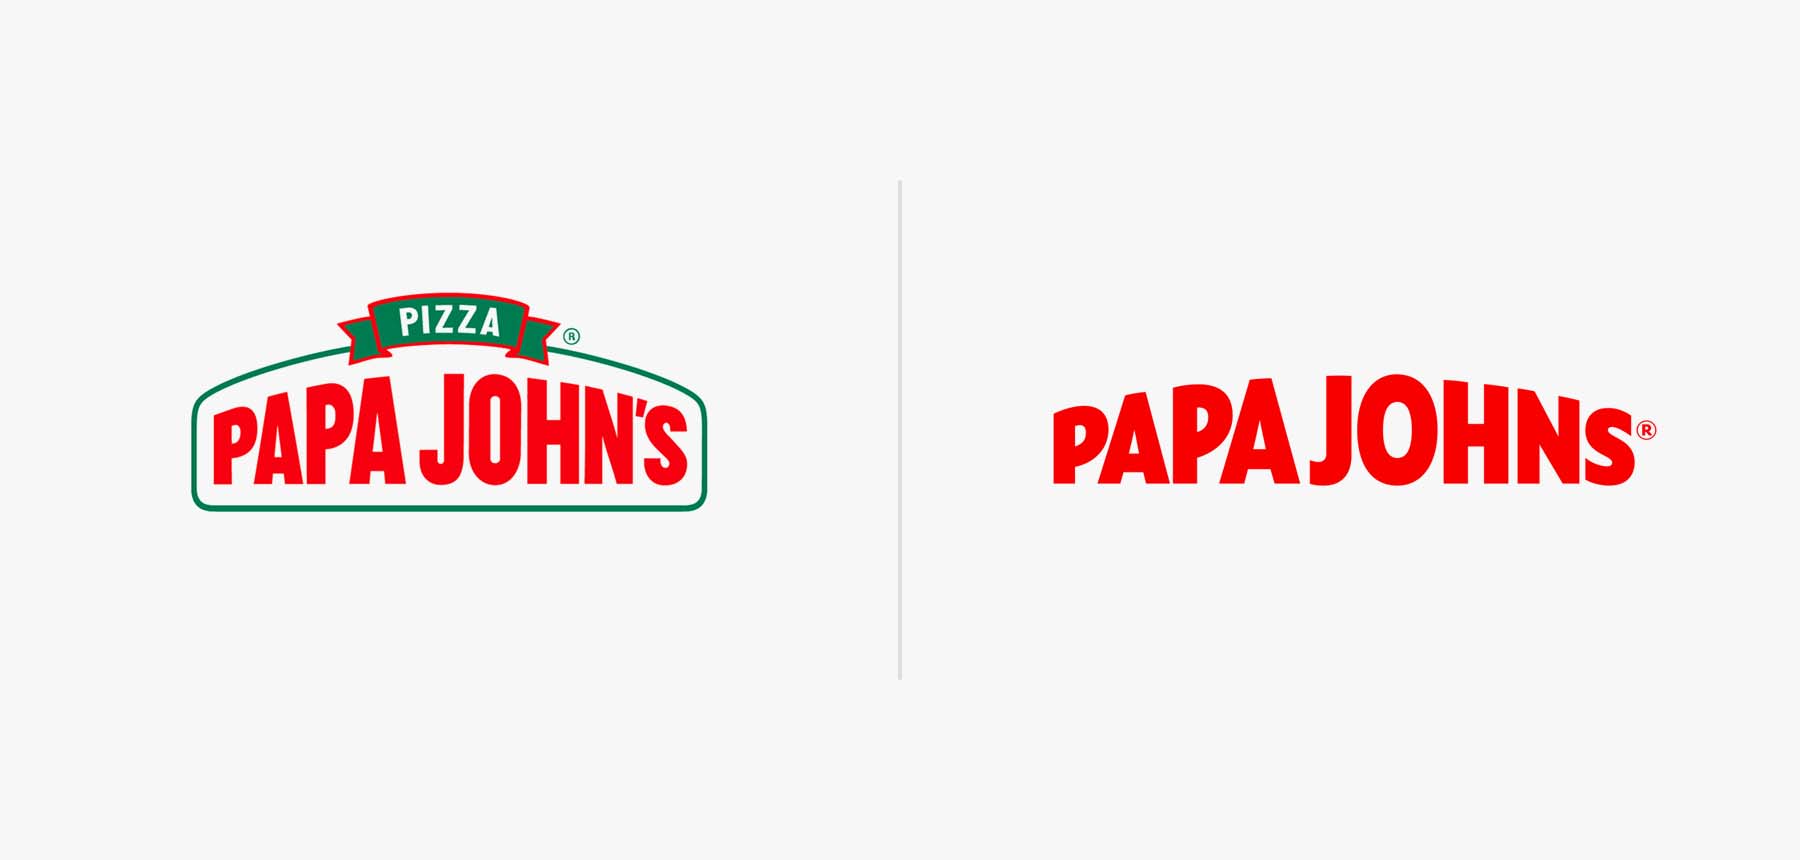 New Logo and Identity for Papa Johns